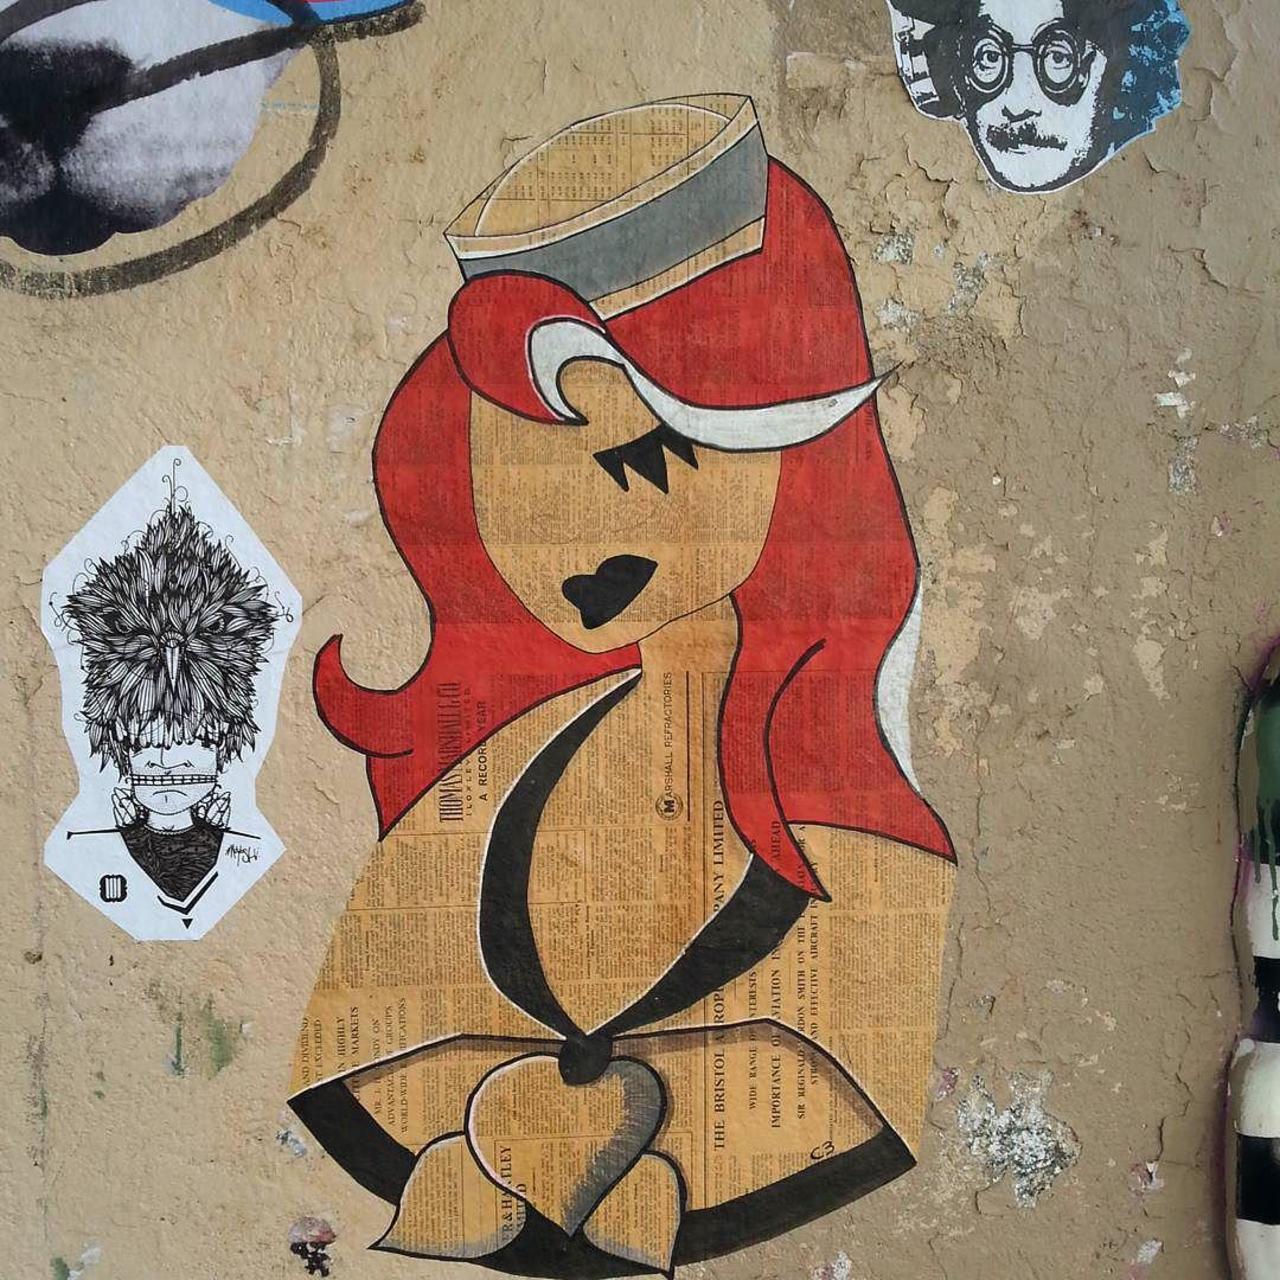 #Paris #graffiti photo by @fotoflaneuse http://ift.tt/1jbbo9P #StreetArt http://t.co/HRishpDQZ5